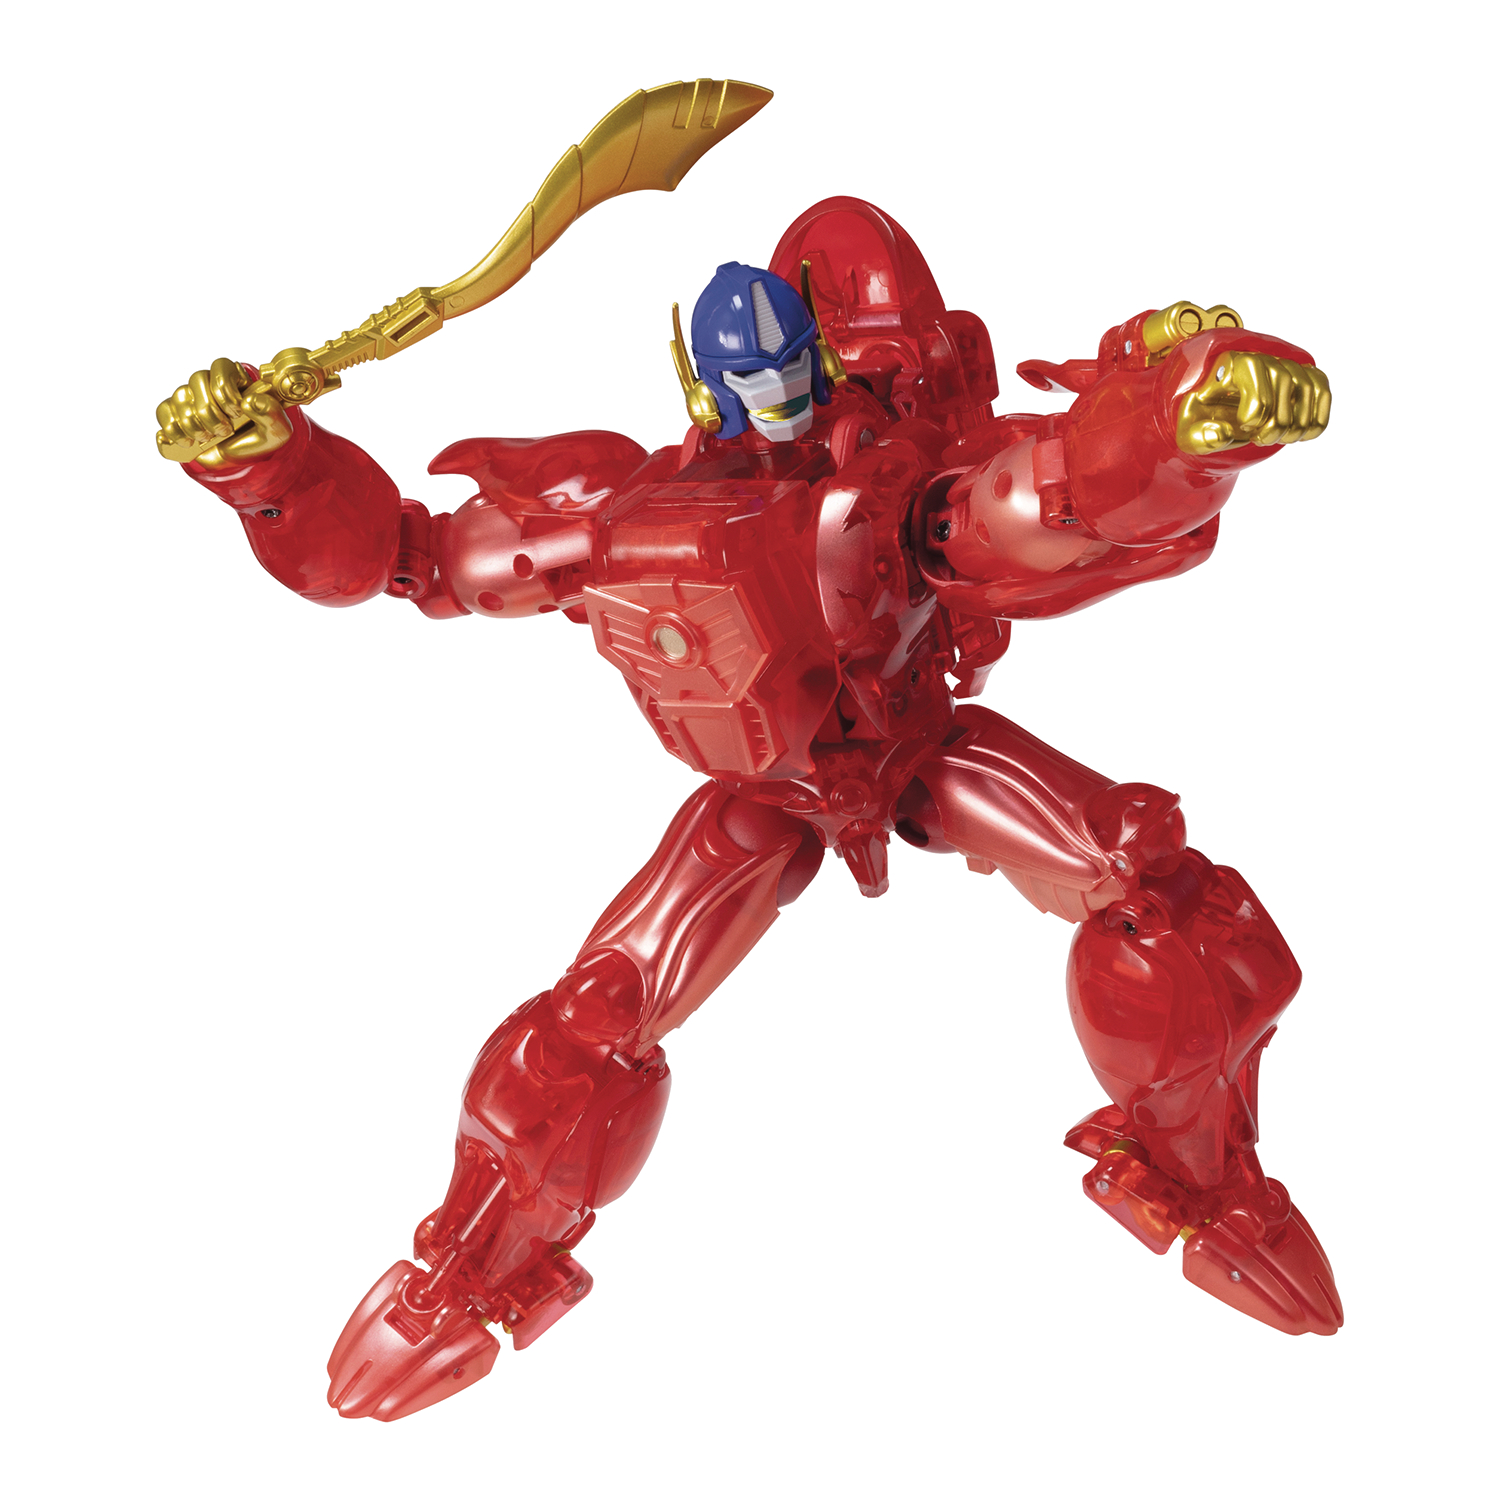 Sentinel Psycho Armor Govarian Frame Action Meister PX Figure in US for sale online 